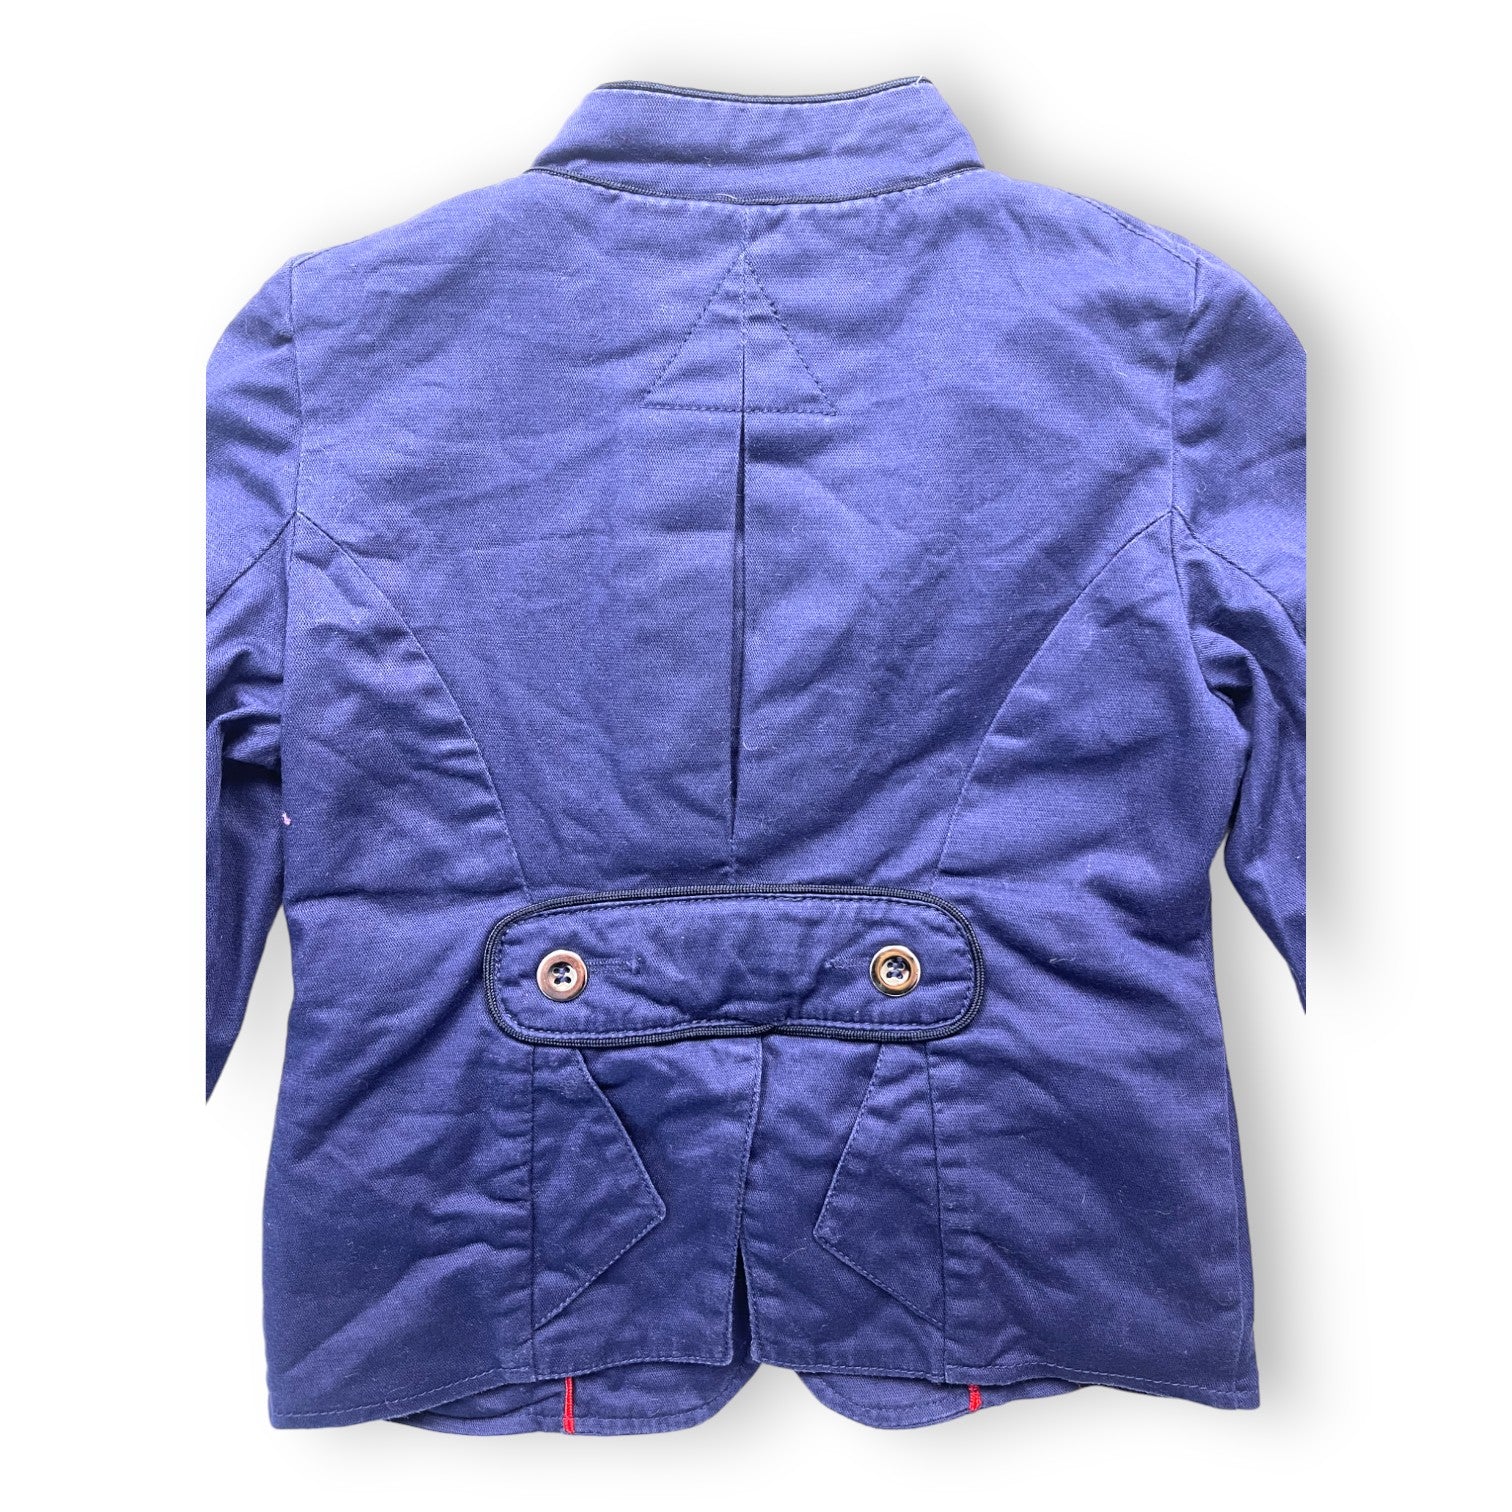 MARC JACOBS - Veste type blazer bleu marine - 3 ans